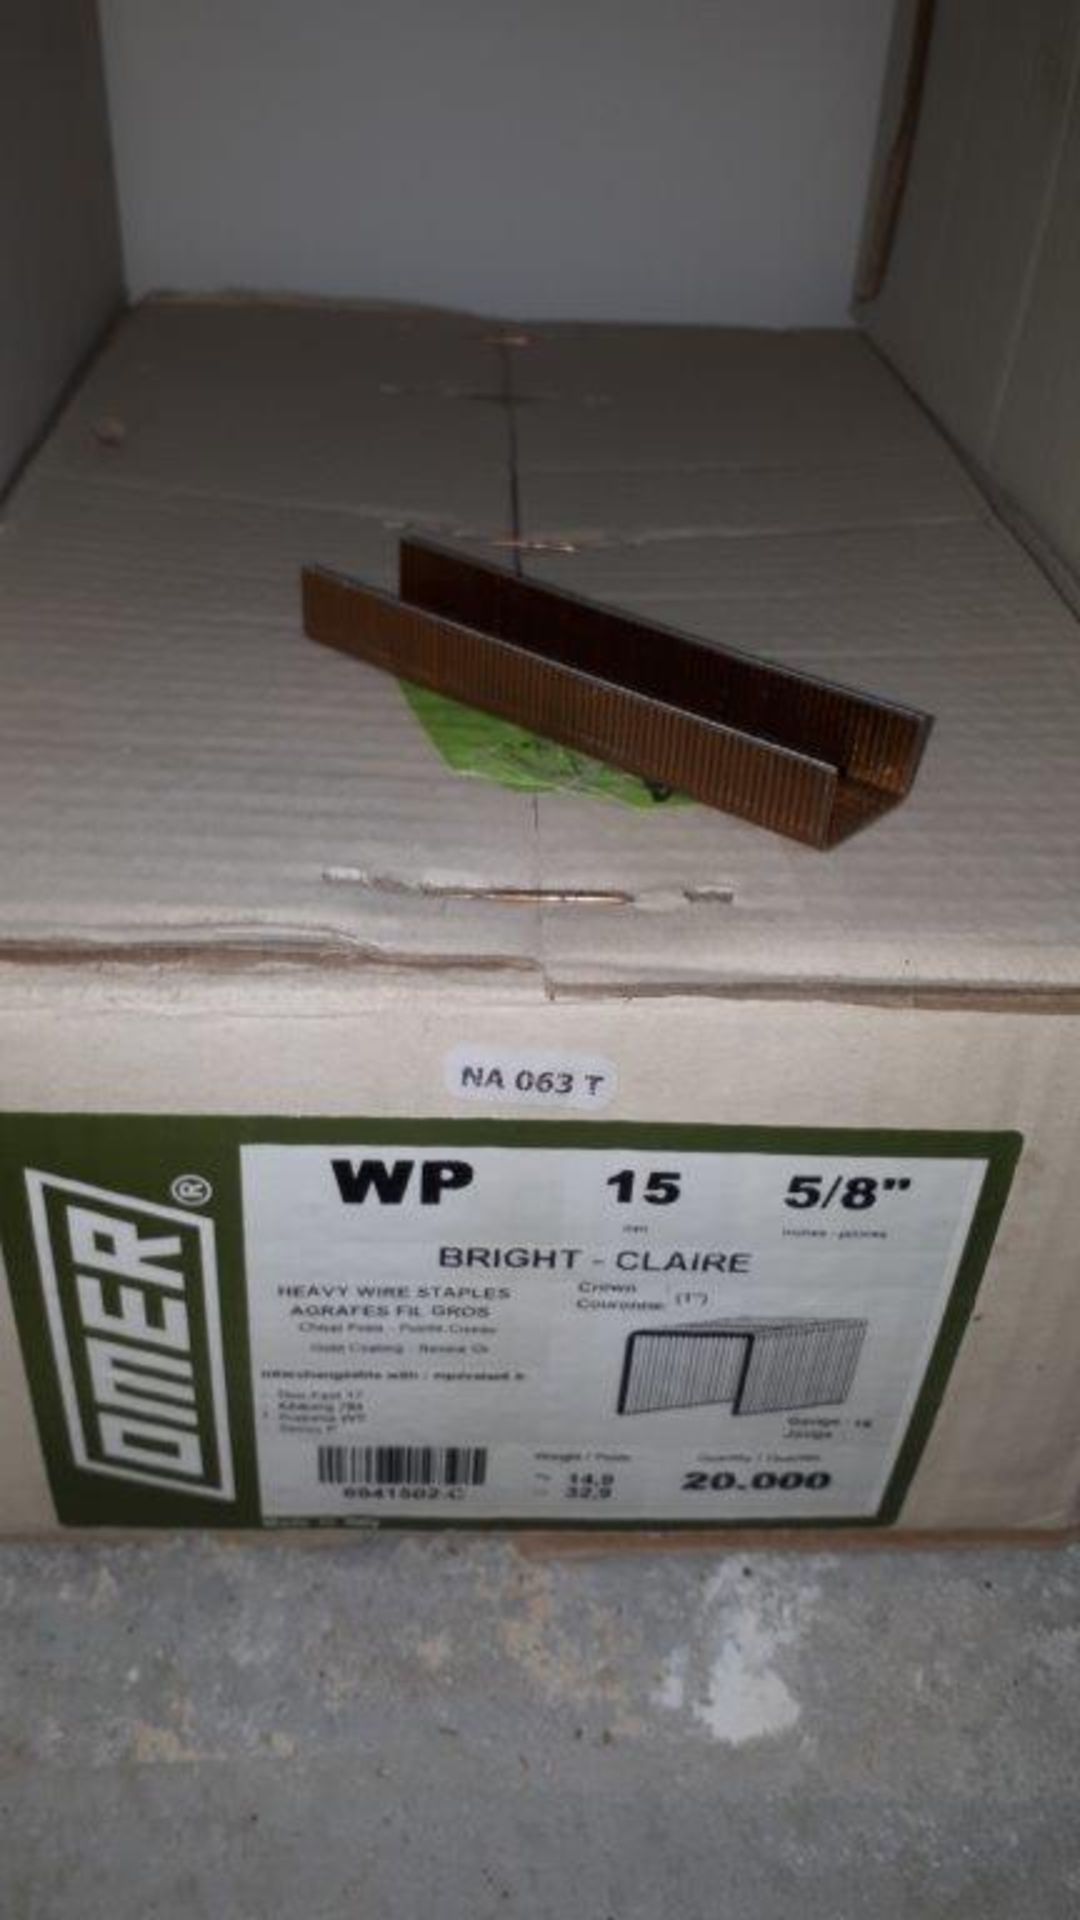 OMER 1" x 5/8" Heavy Wire Staples (20,000/box)